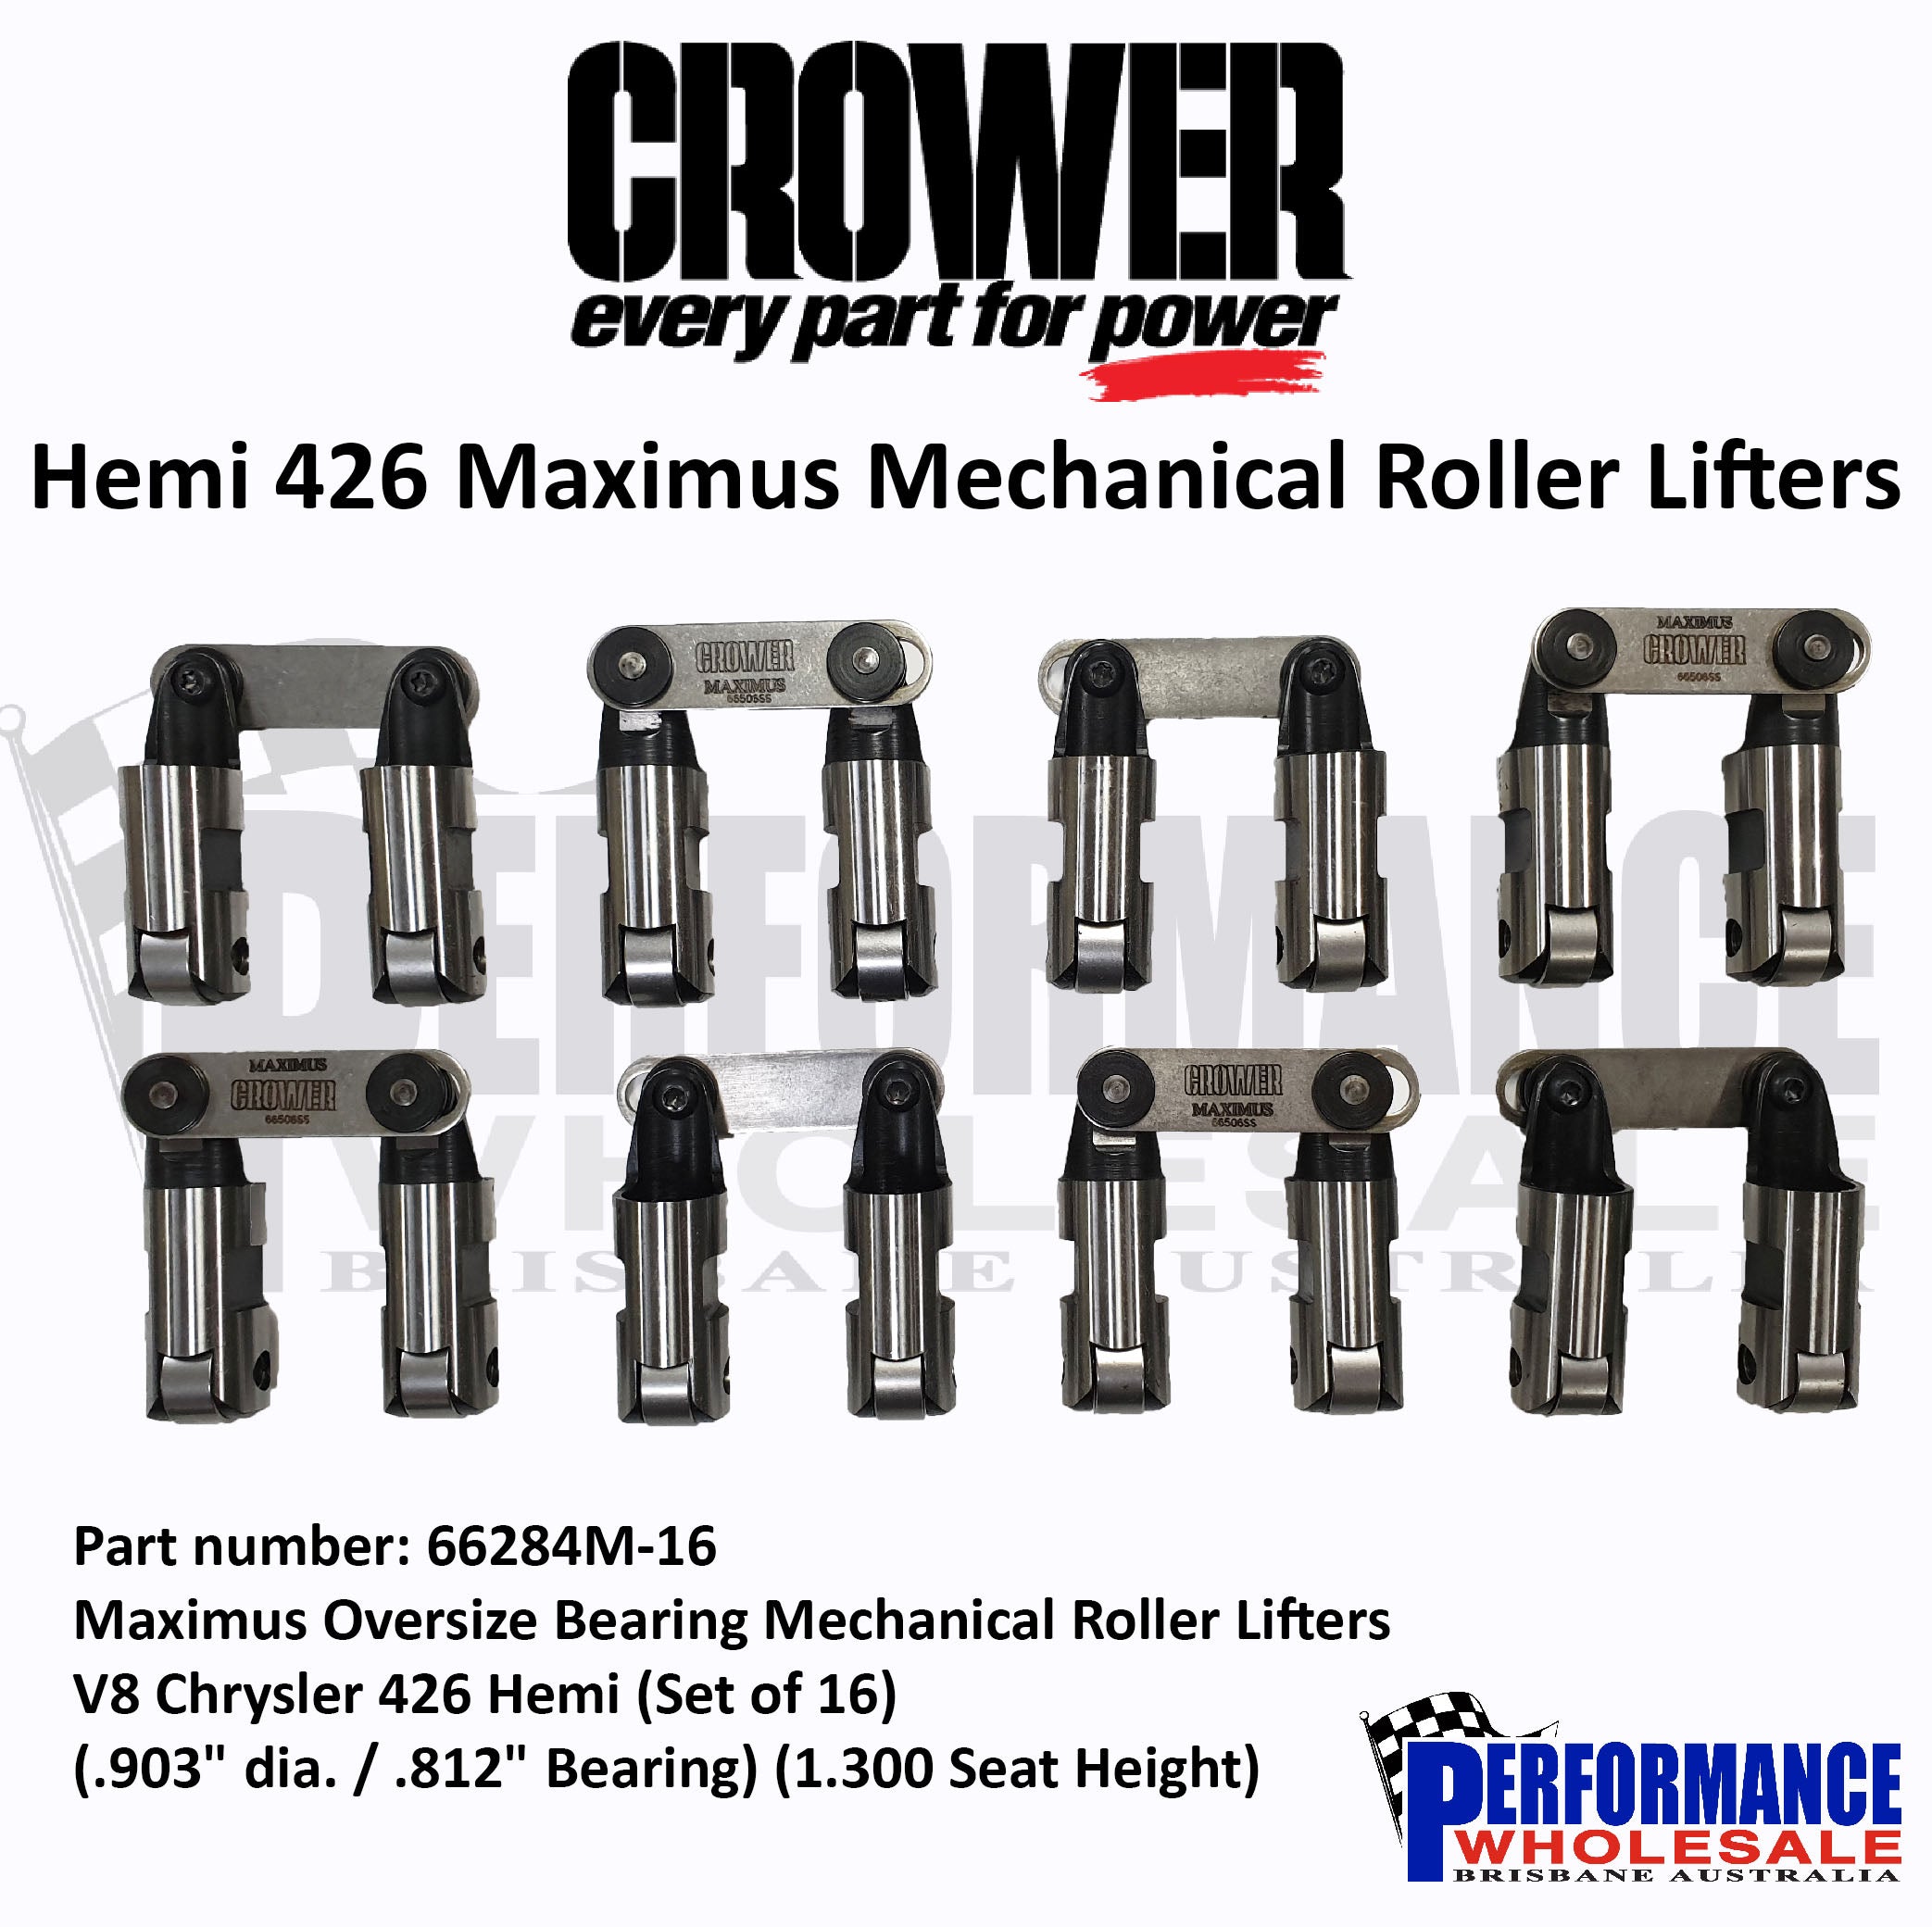 Crower Maximus Mechanical Roller Lifters Suit Chrysler 426 Hemi